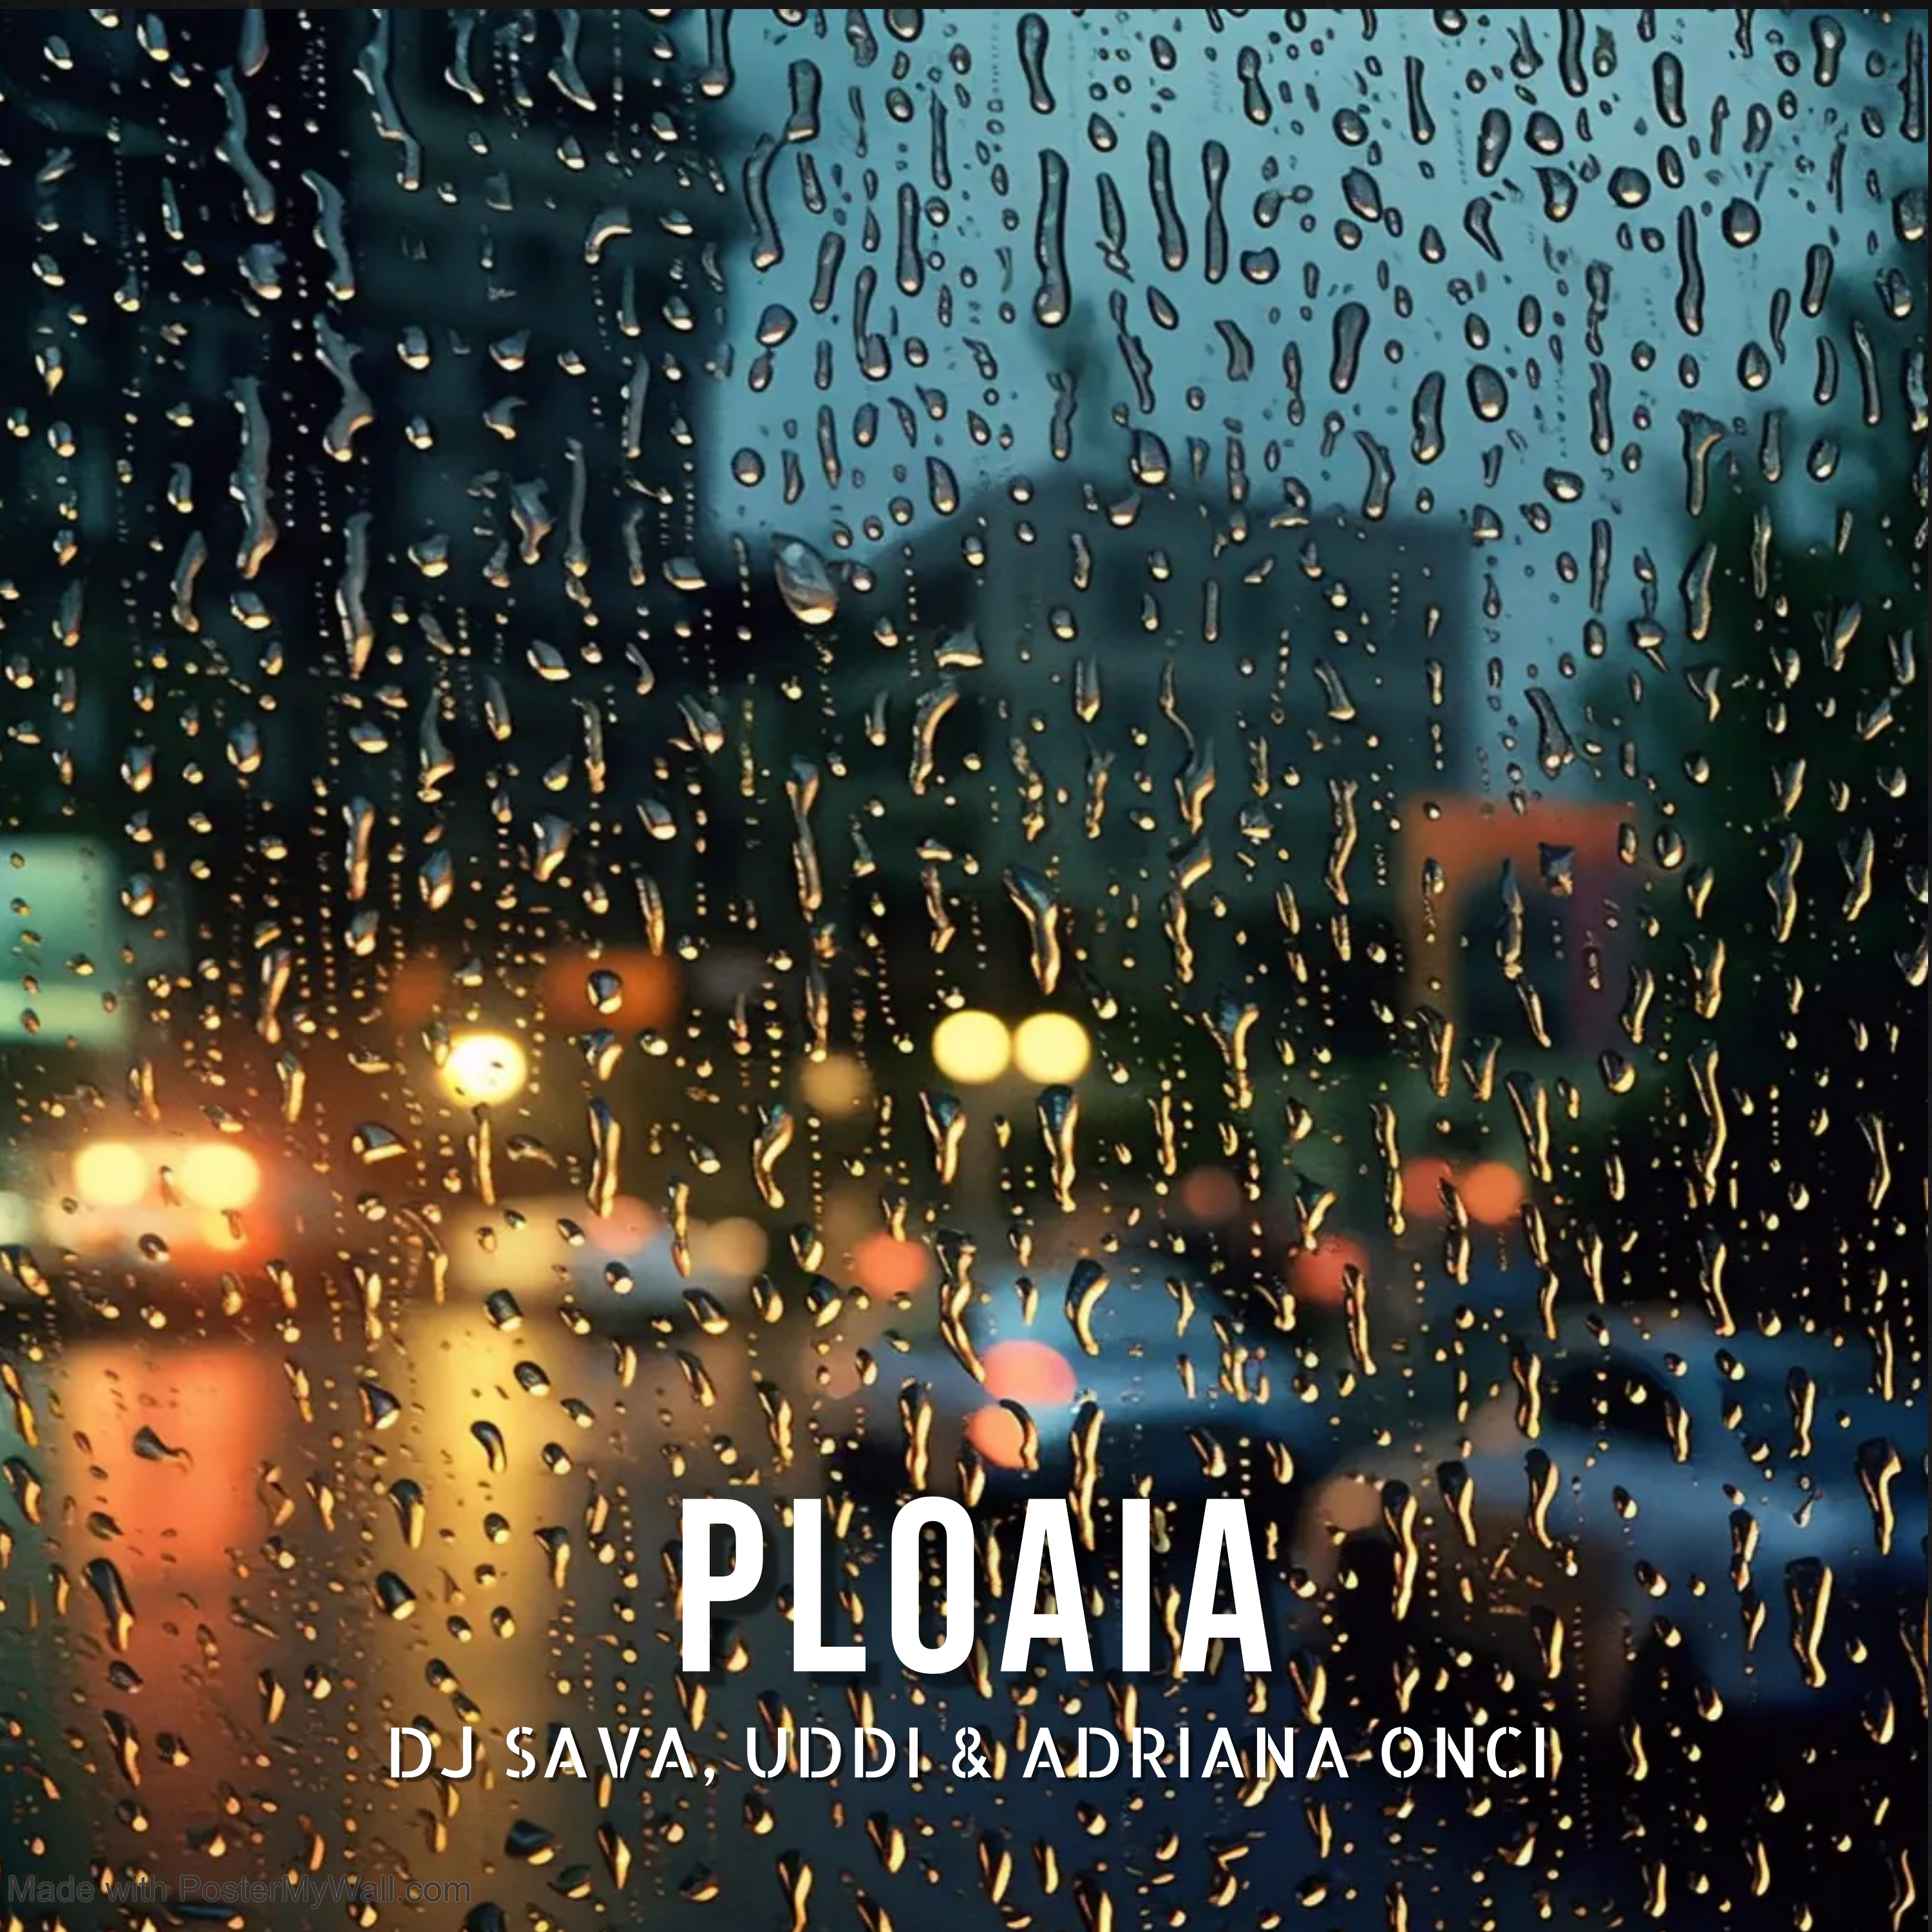 I loved you dj sava feat. Ploaia.